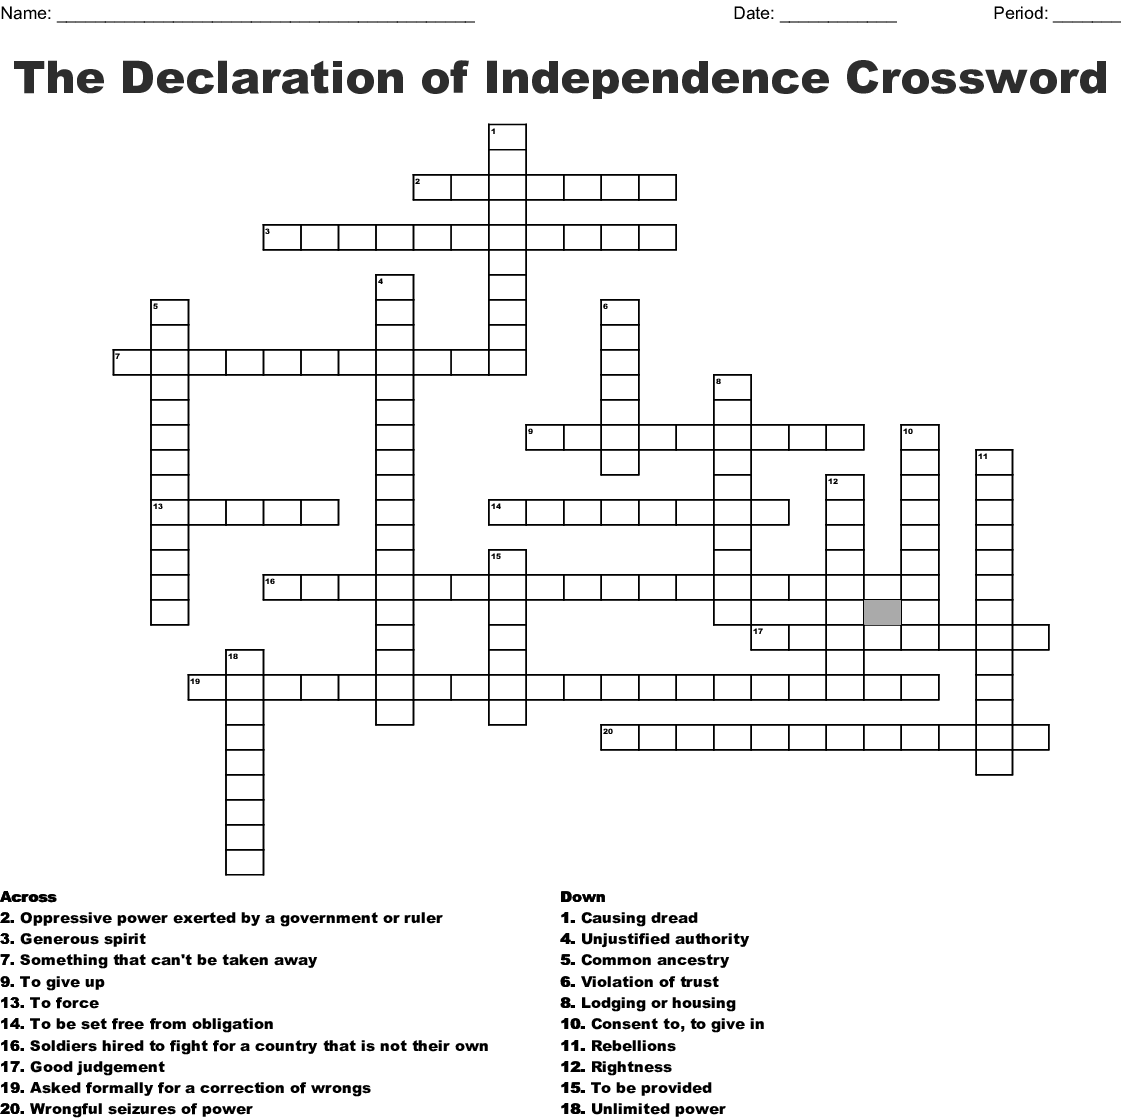 Thomas Jefferson Crossword WordMint FreePrintableTM com